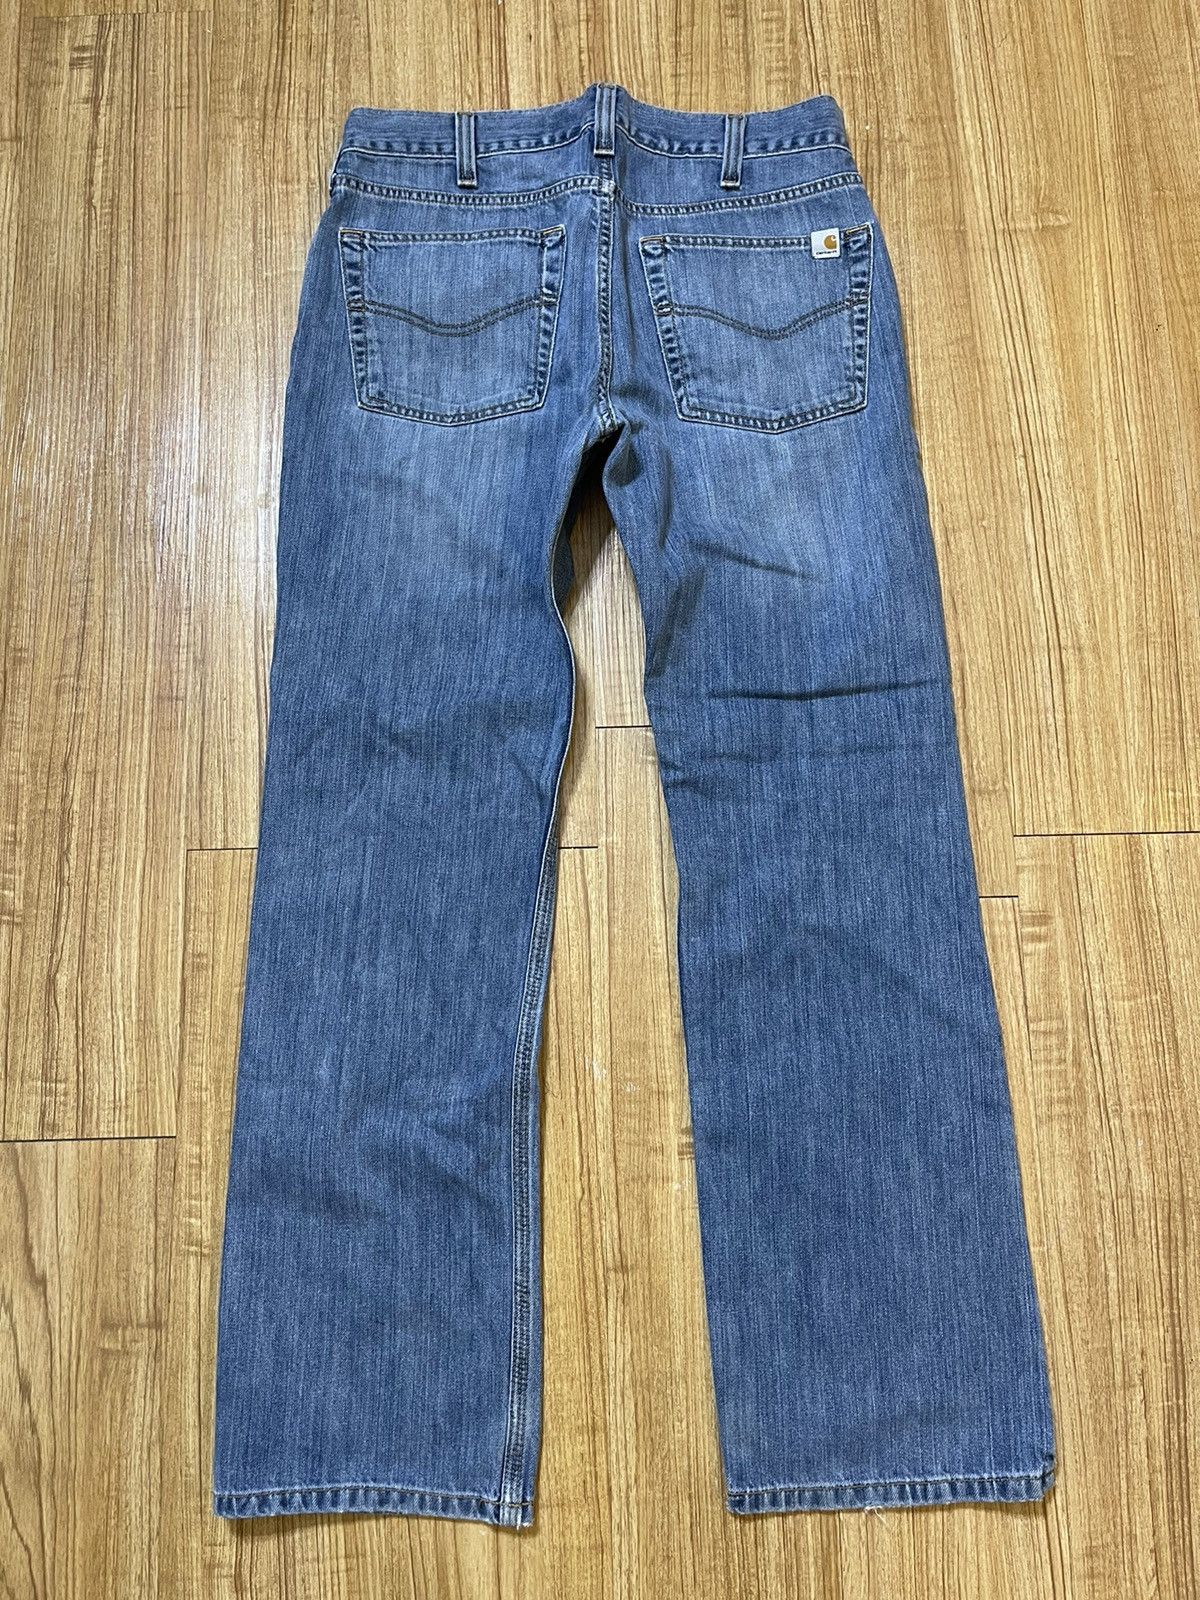 Carhartt Blue Carhartt jean pants Size US 32 / EU 48 - 5 Thumbnail